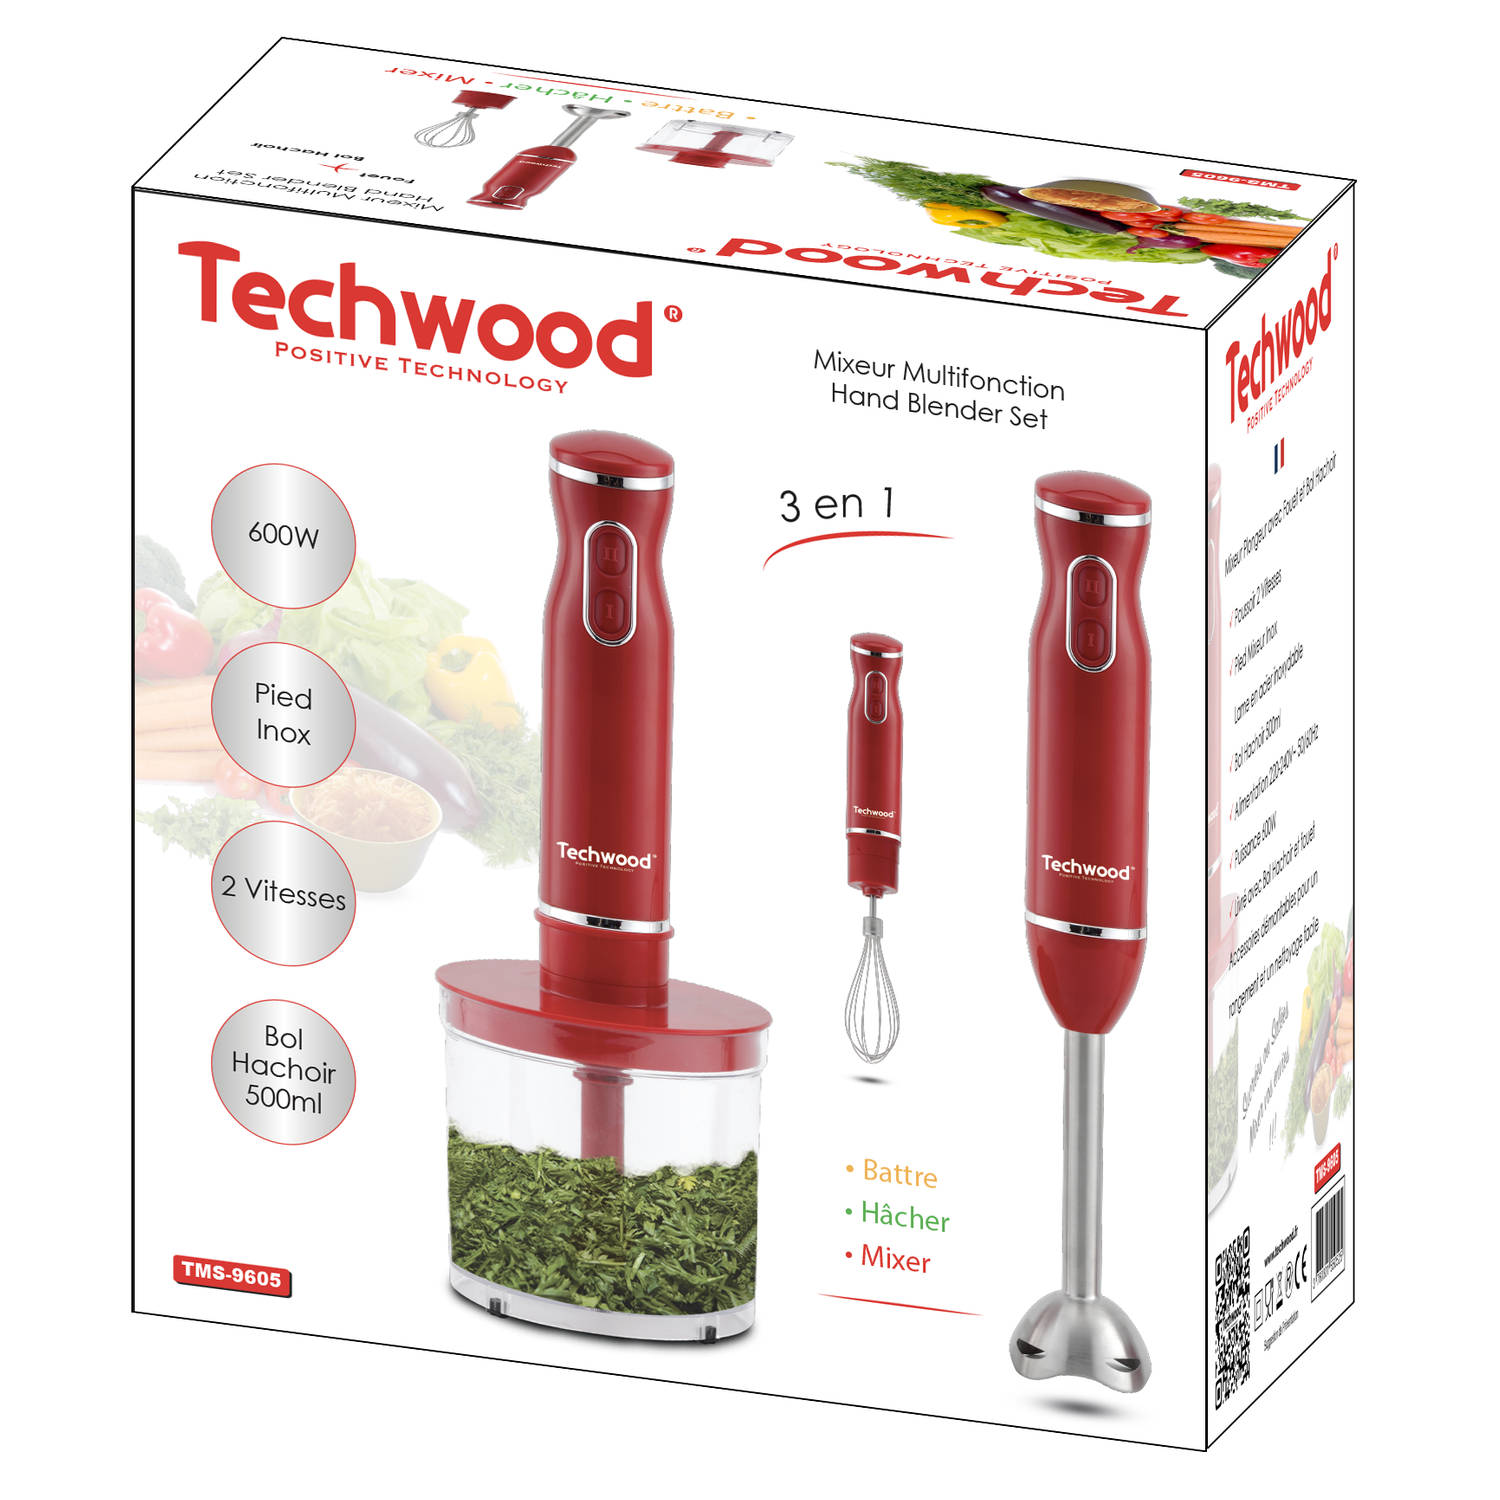 Techwood миксер multifonction hand Blender Set TMS 8366. Блендер красный. Блендер игрушка красный.